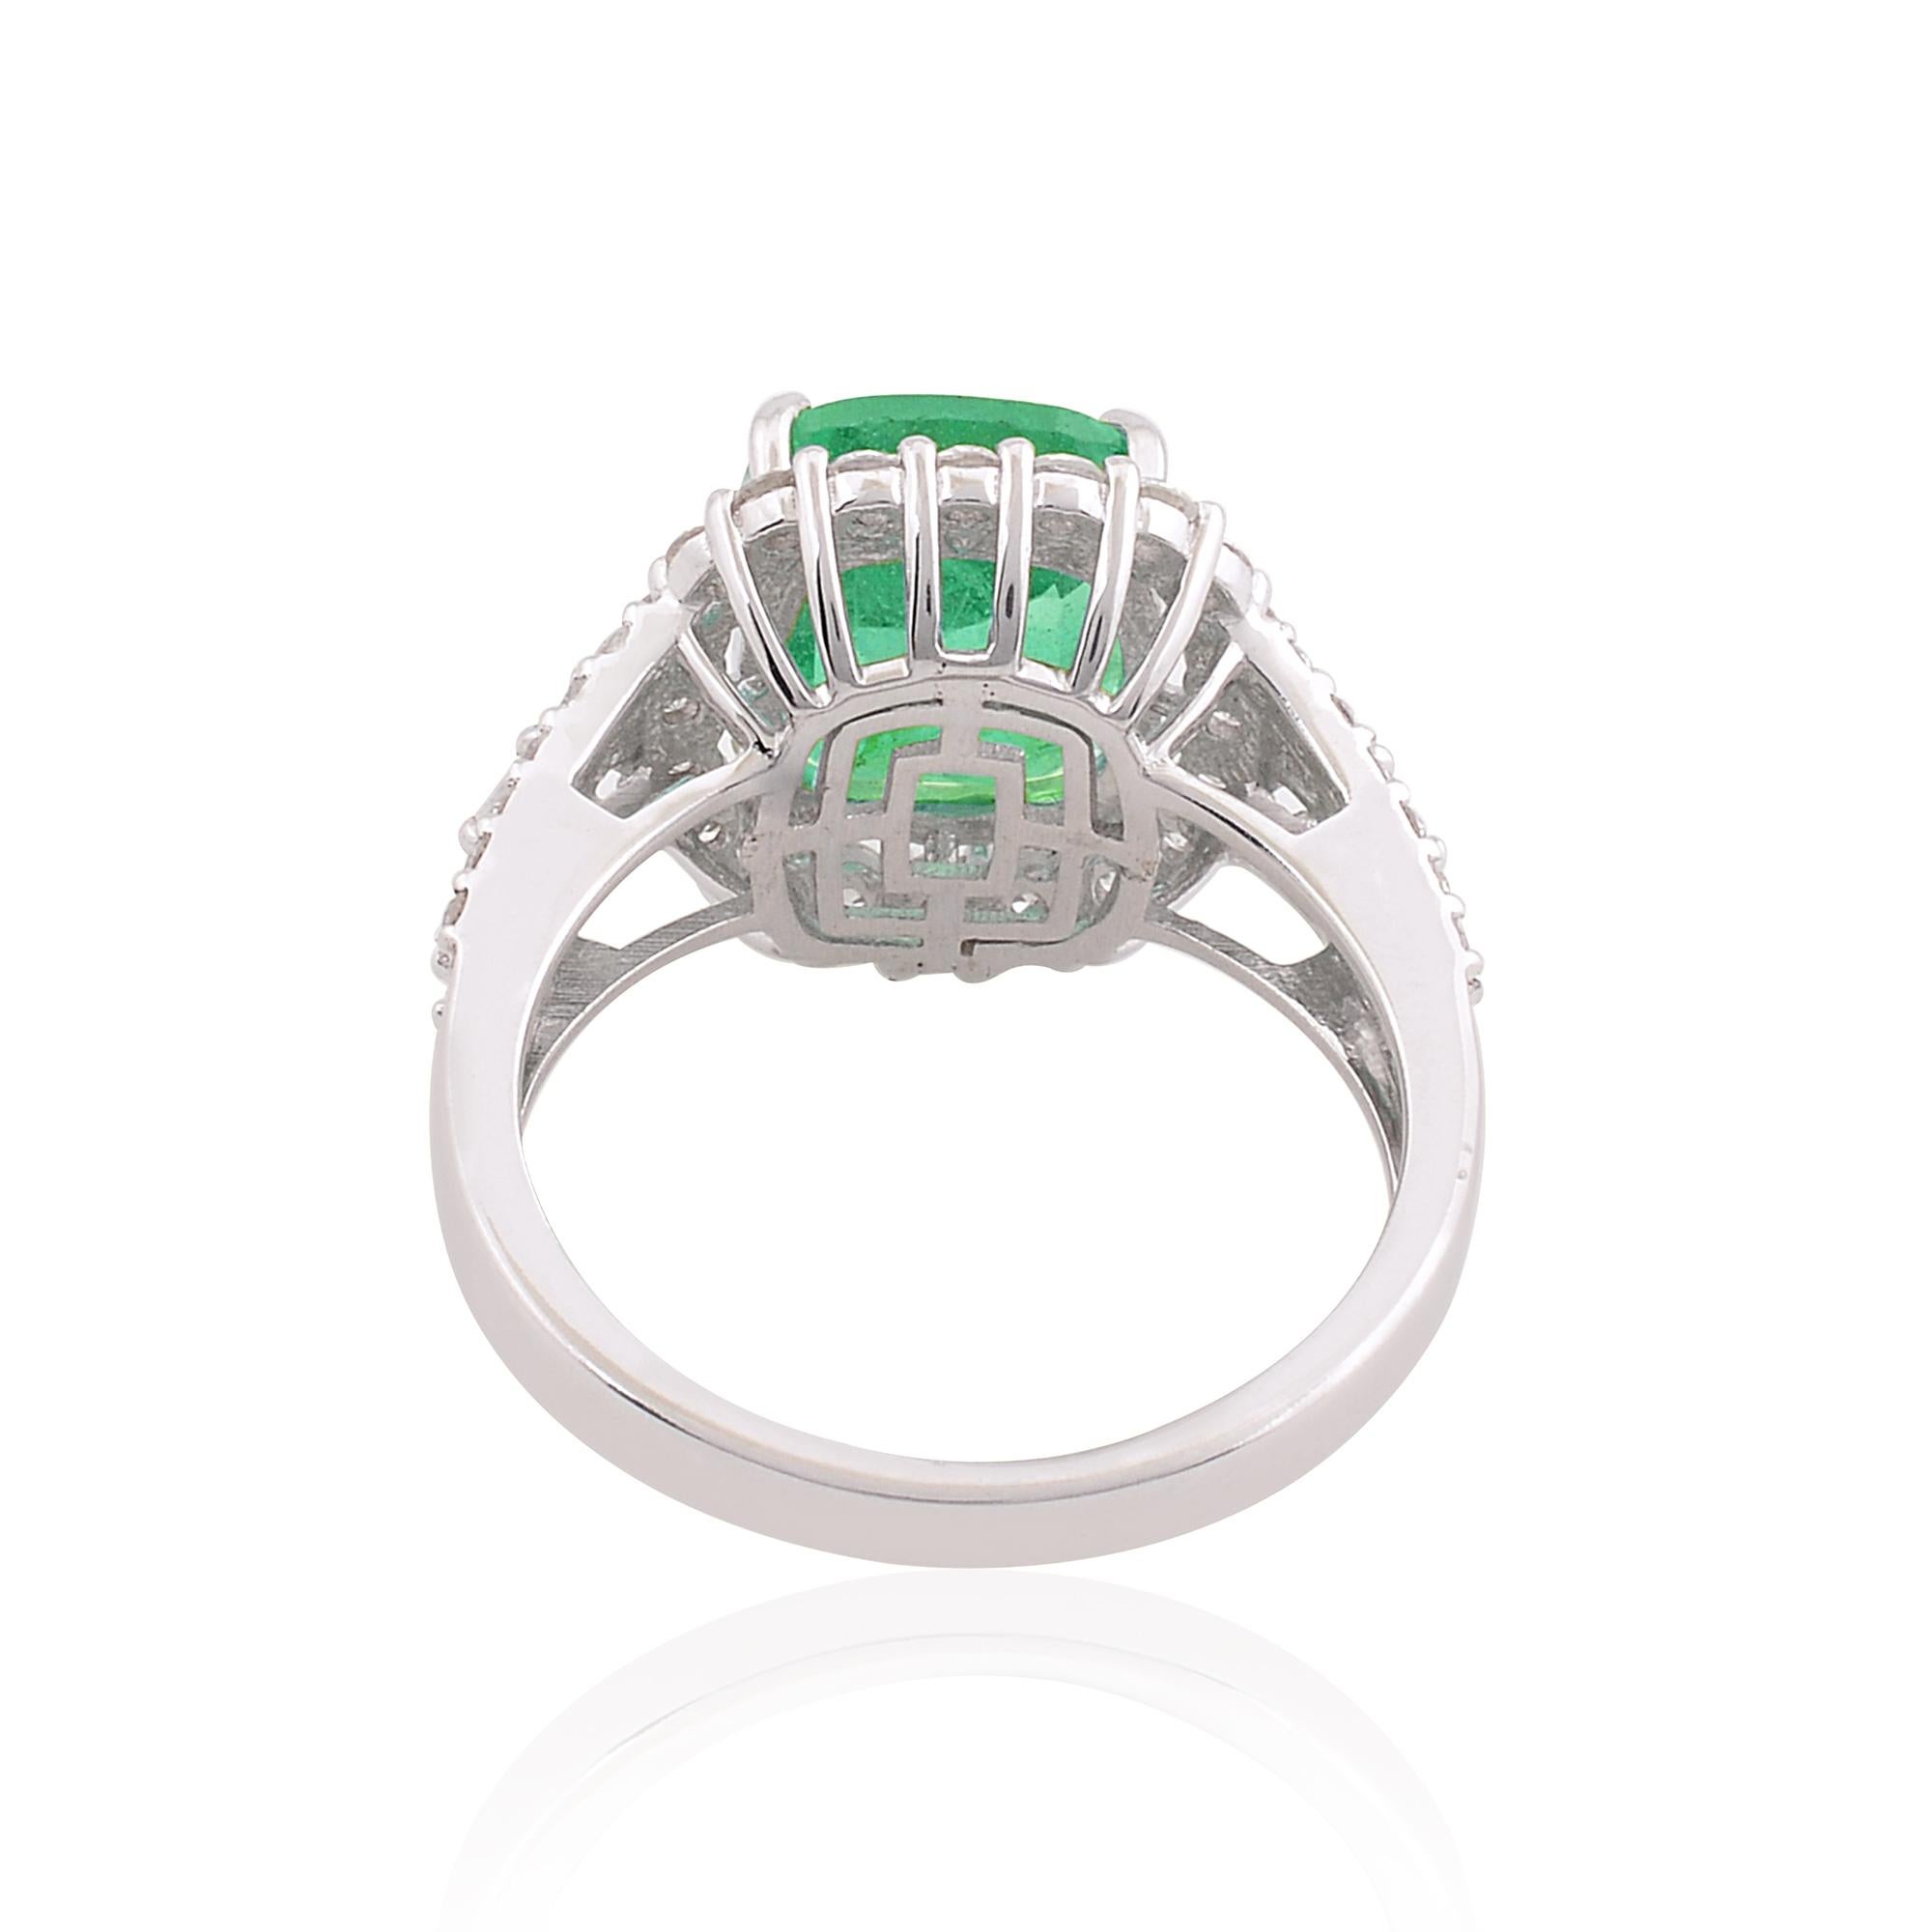 For Sale:  Natural Emerald Gemstone Cocktail Ring Diamond 10 Karat White Gold Fine Jewelry 4